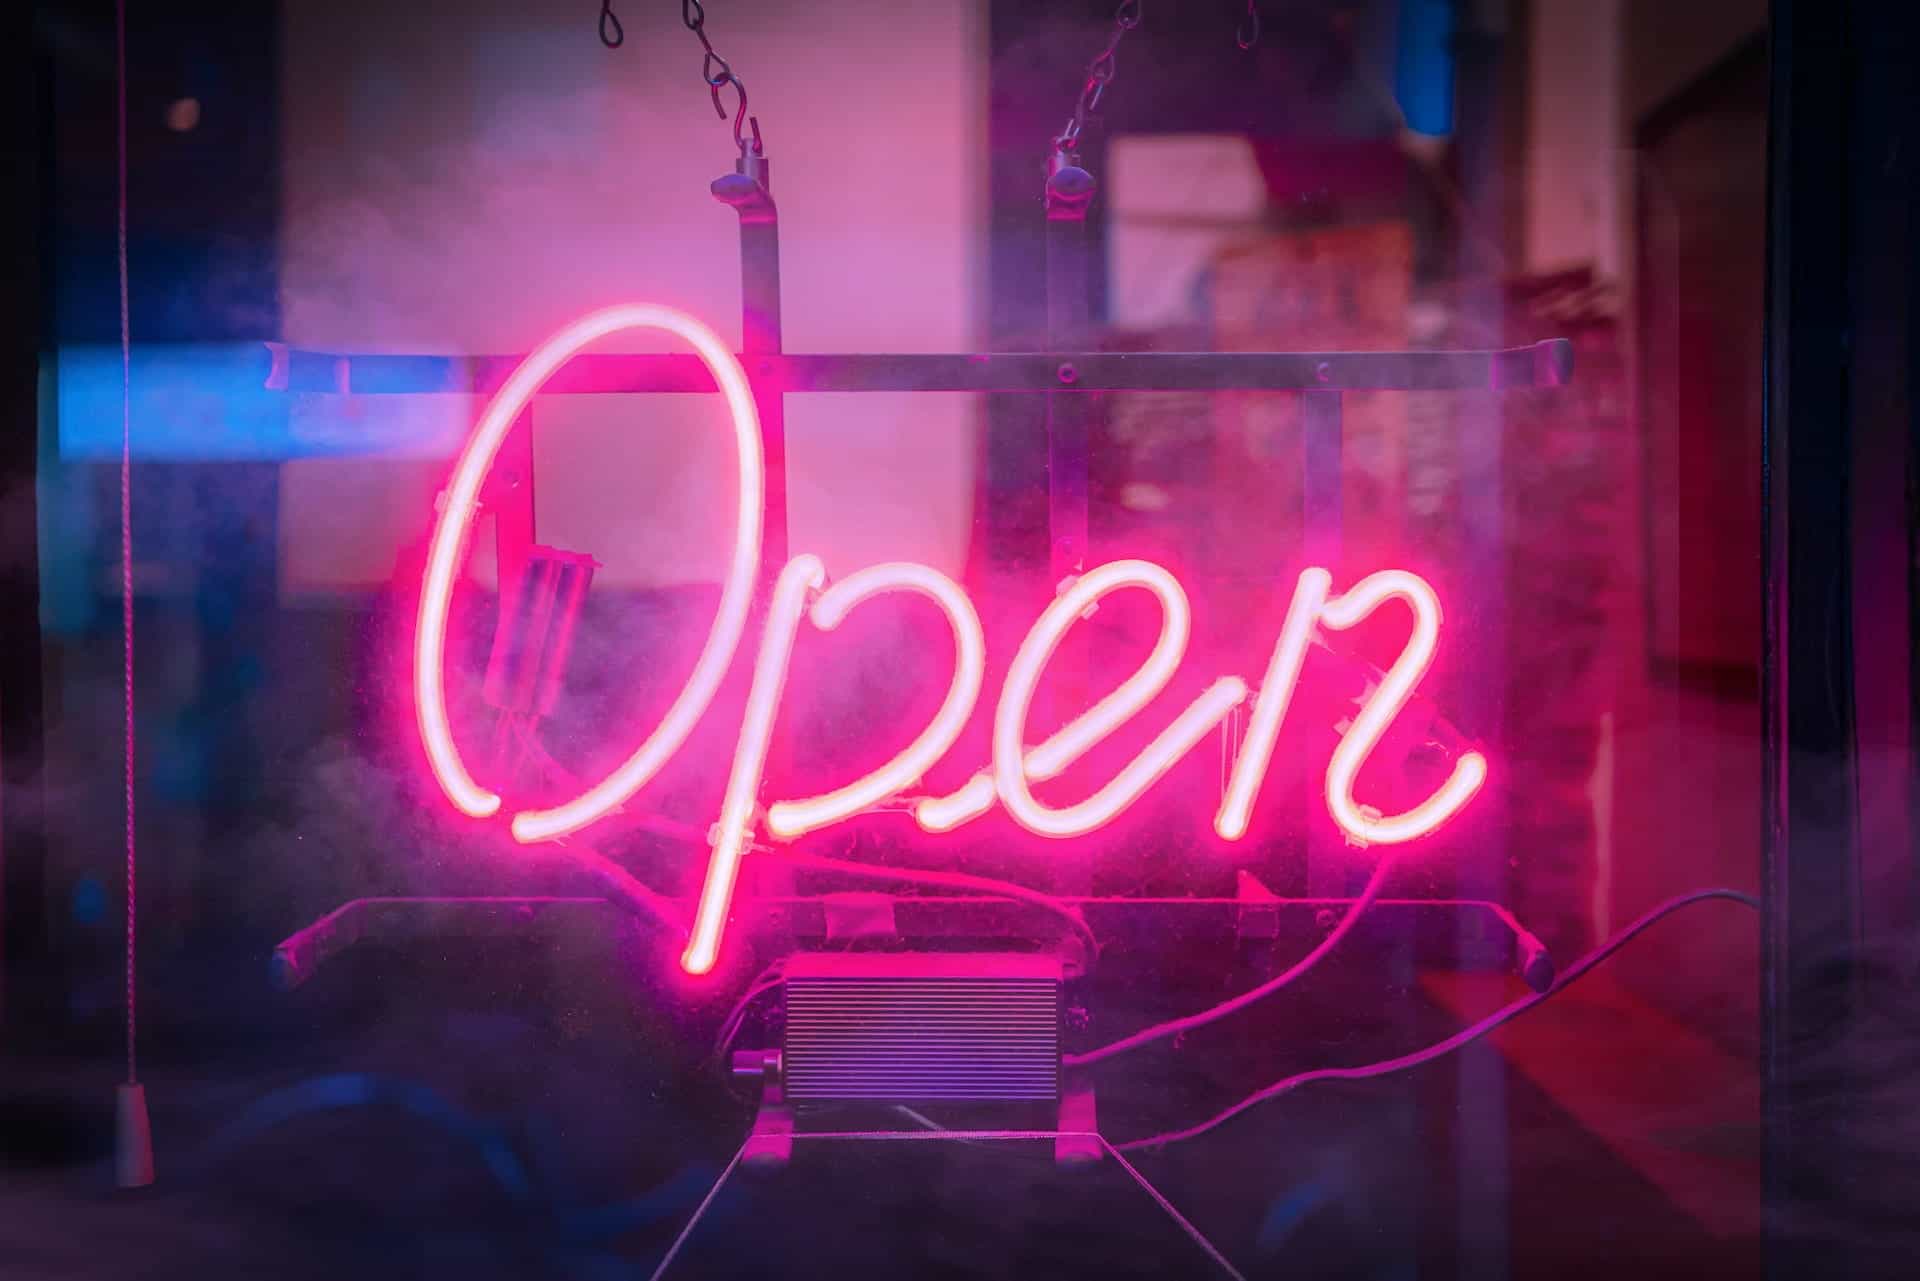 A neon pink light reads "Open" on a glass shop window.